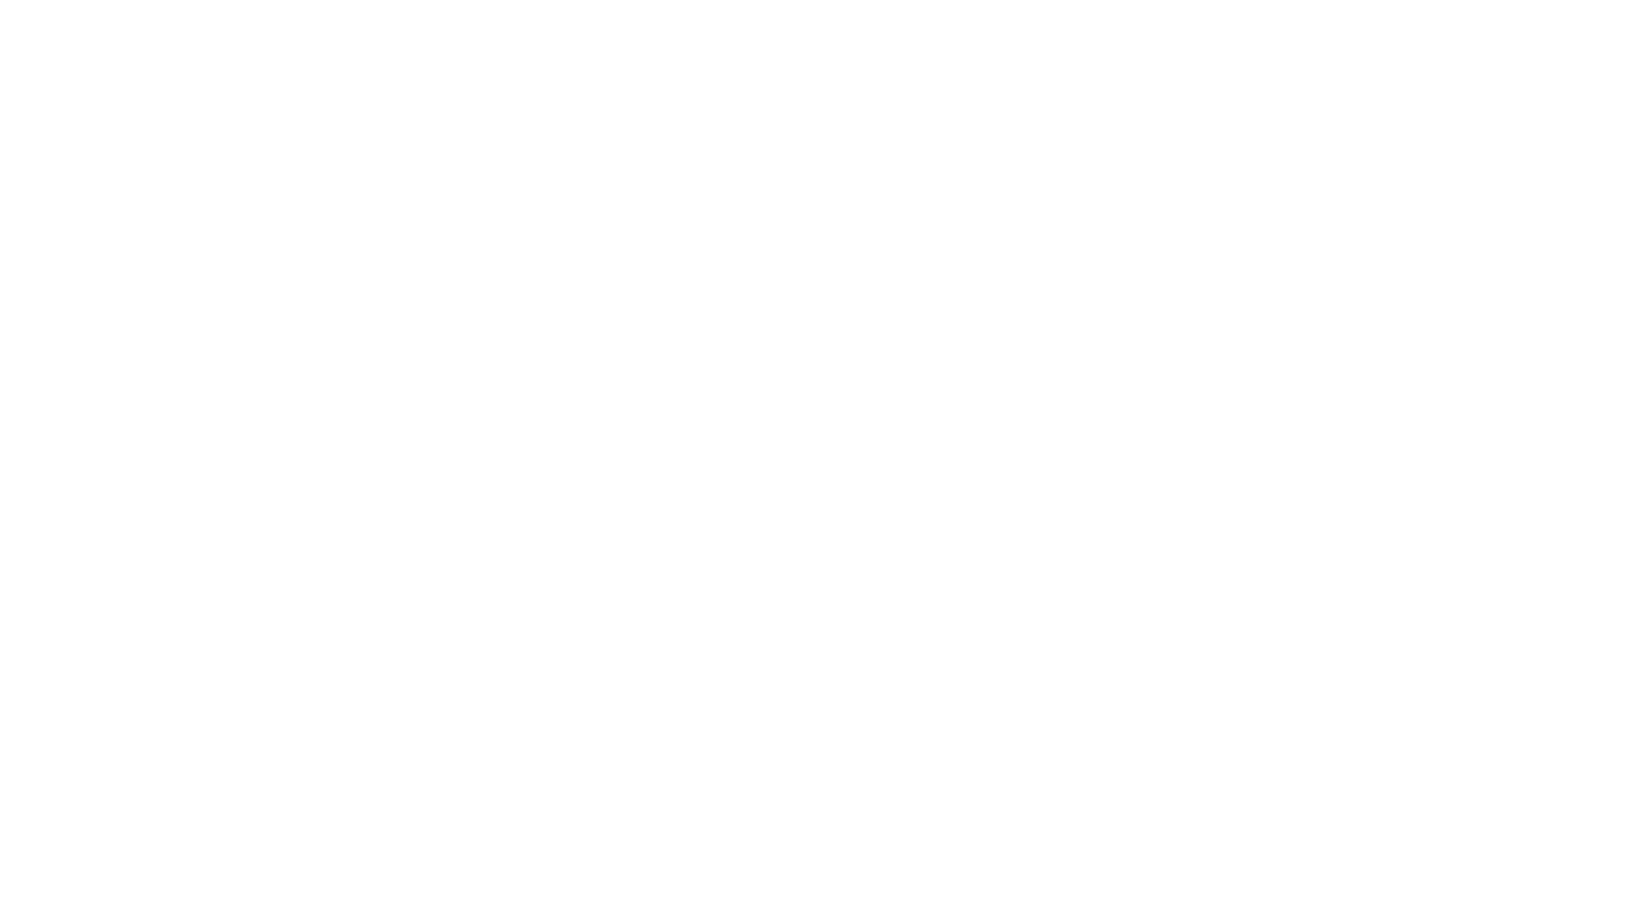 LVRK – Liegenschaftsverwaltung